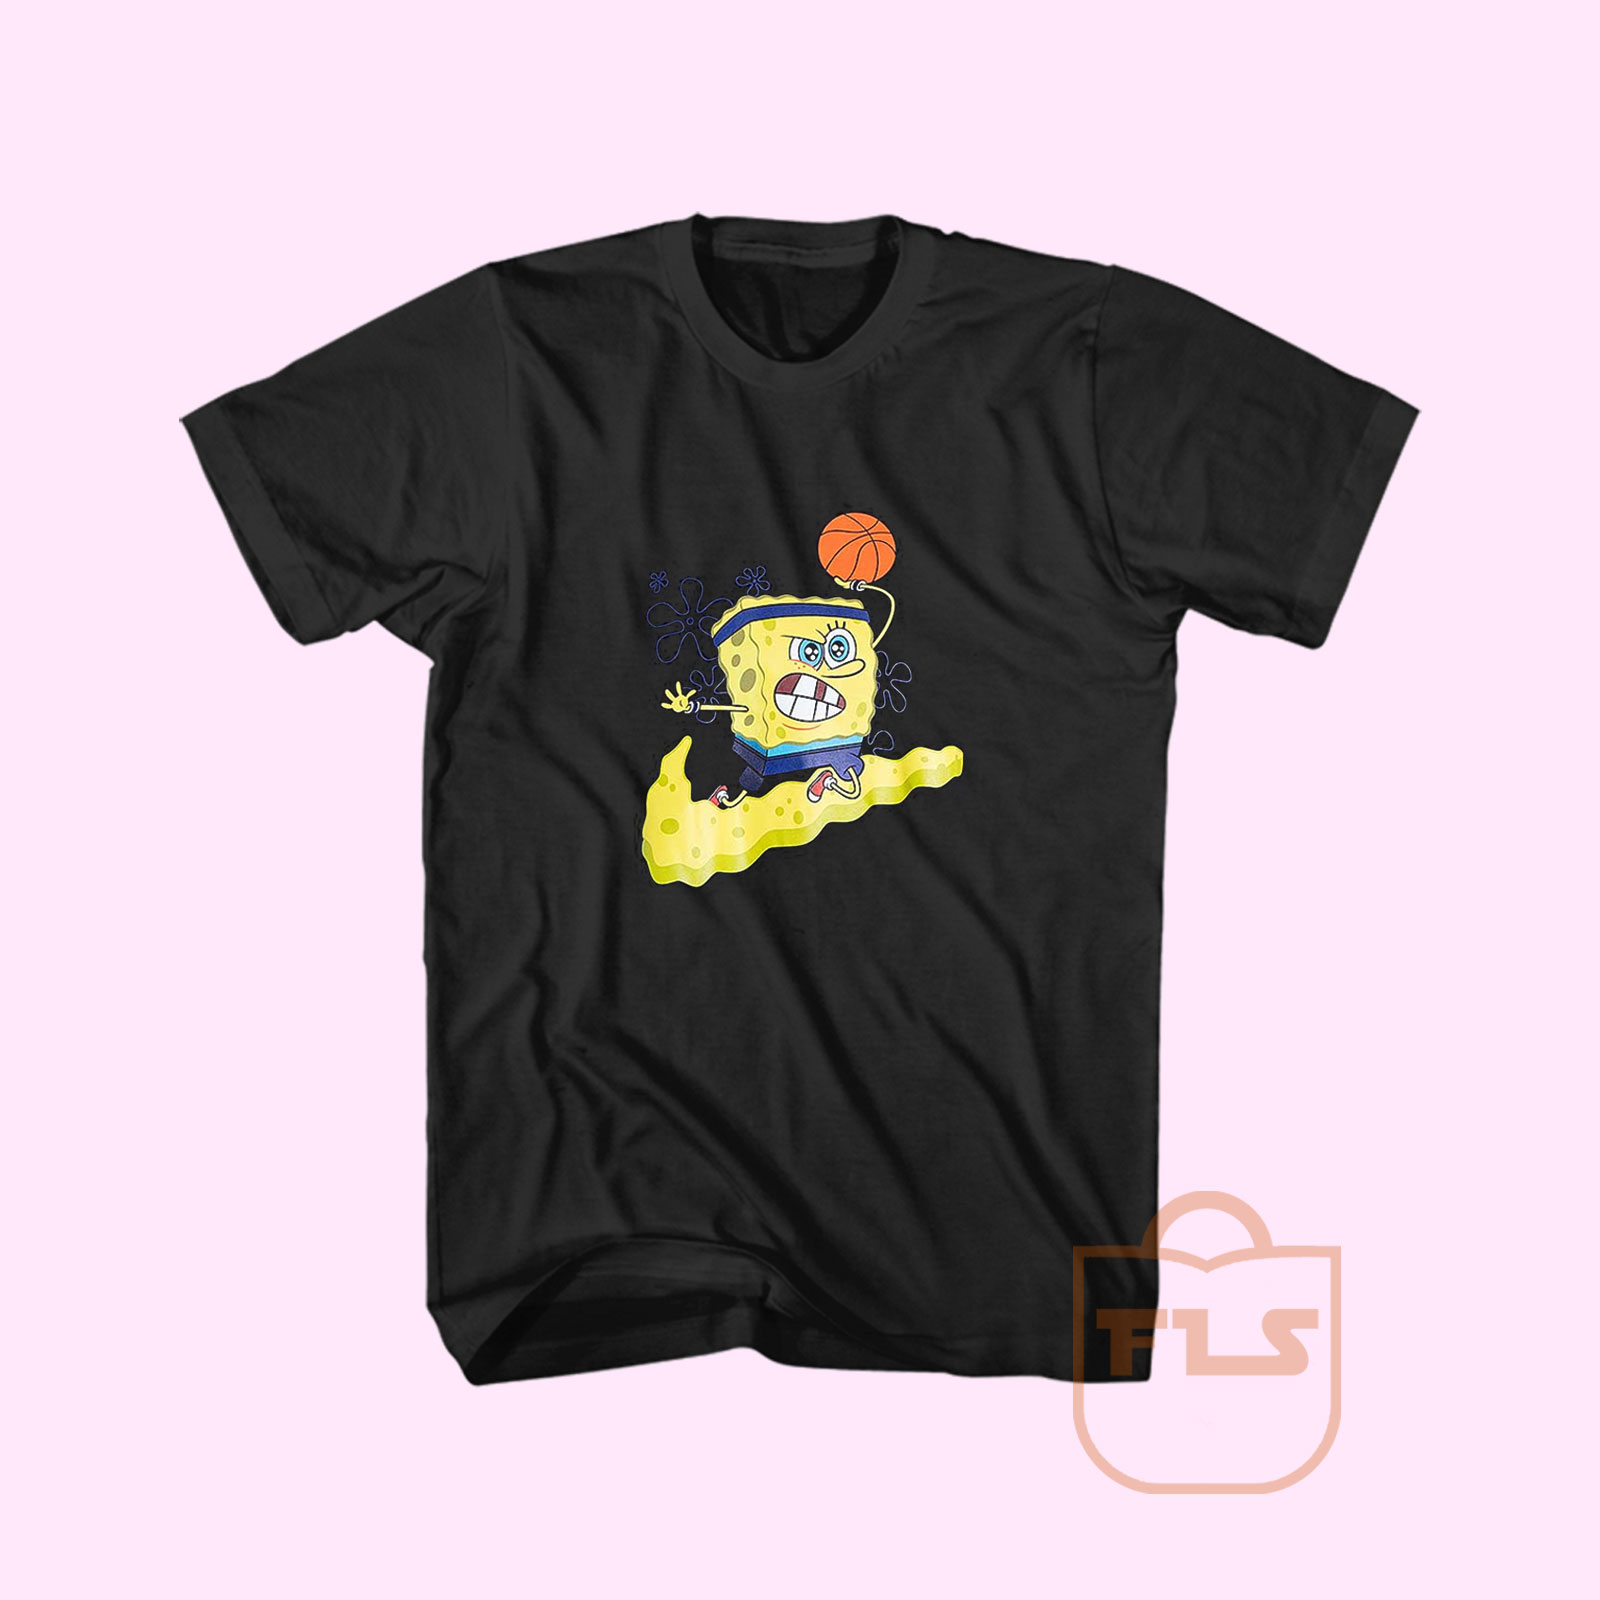 kyrie spongebob shirts